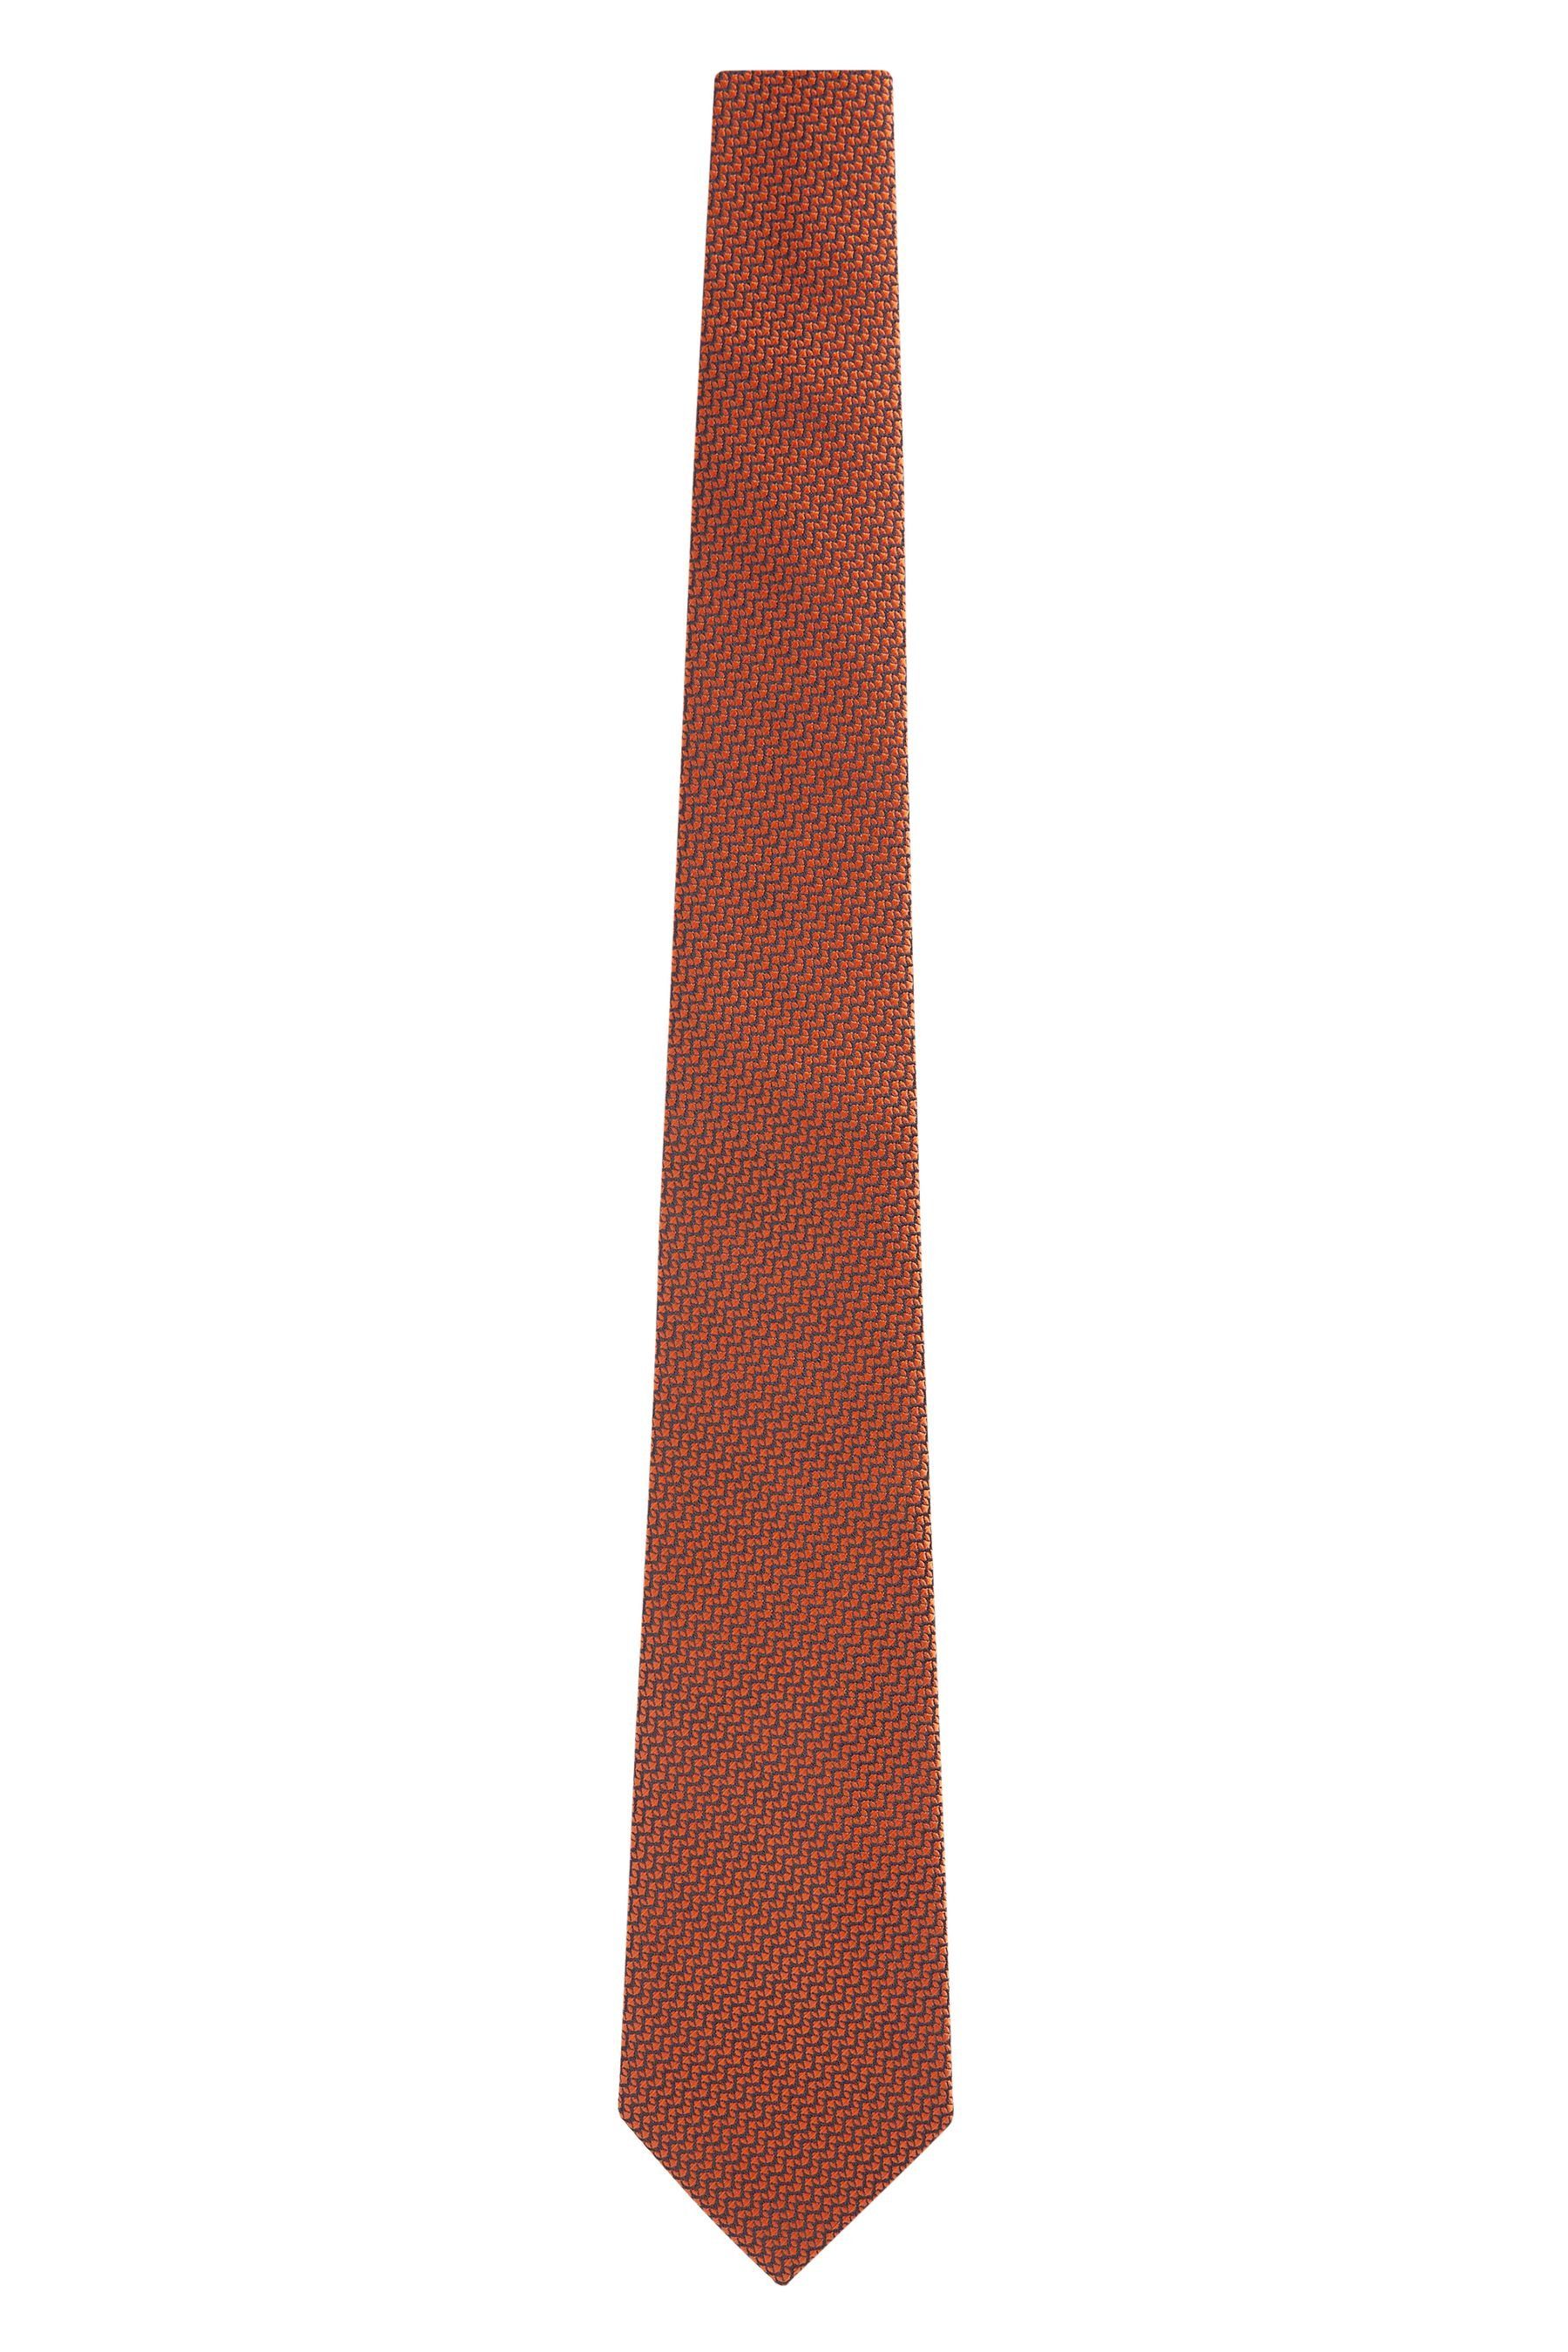 Next Krawatte Strukturierte Orange Krawatte (1-St)